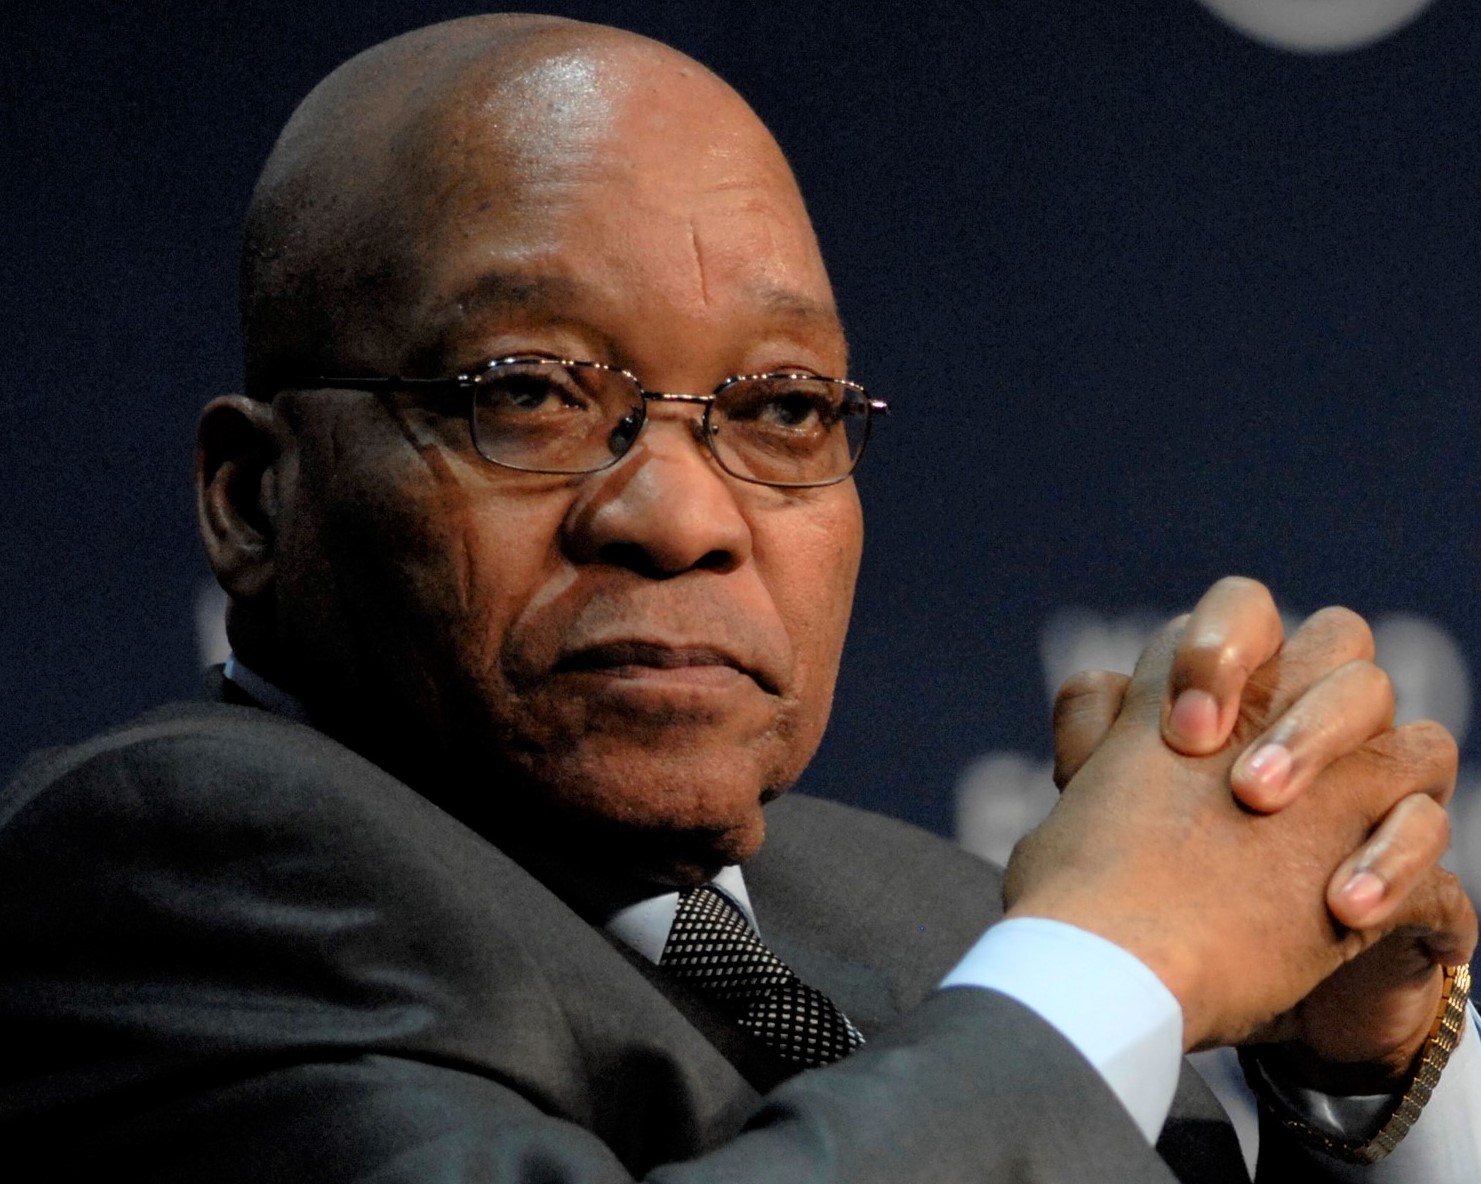 Jacob Zuma 2009 World Economic Forum on Africa 1 cropped رامي زهدي الخبير في الشؤون الأفريقية يقدم قراءة في مشهد الإنتخابات العامة بجنوب أفريقيا